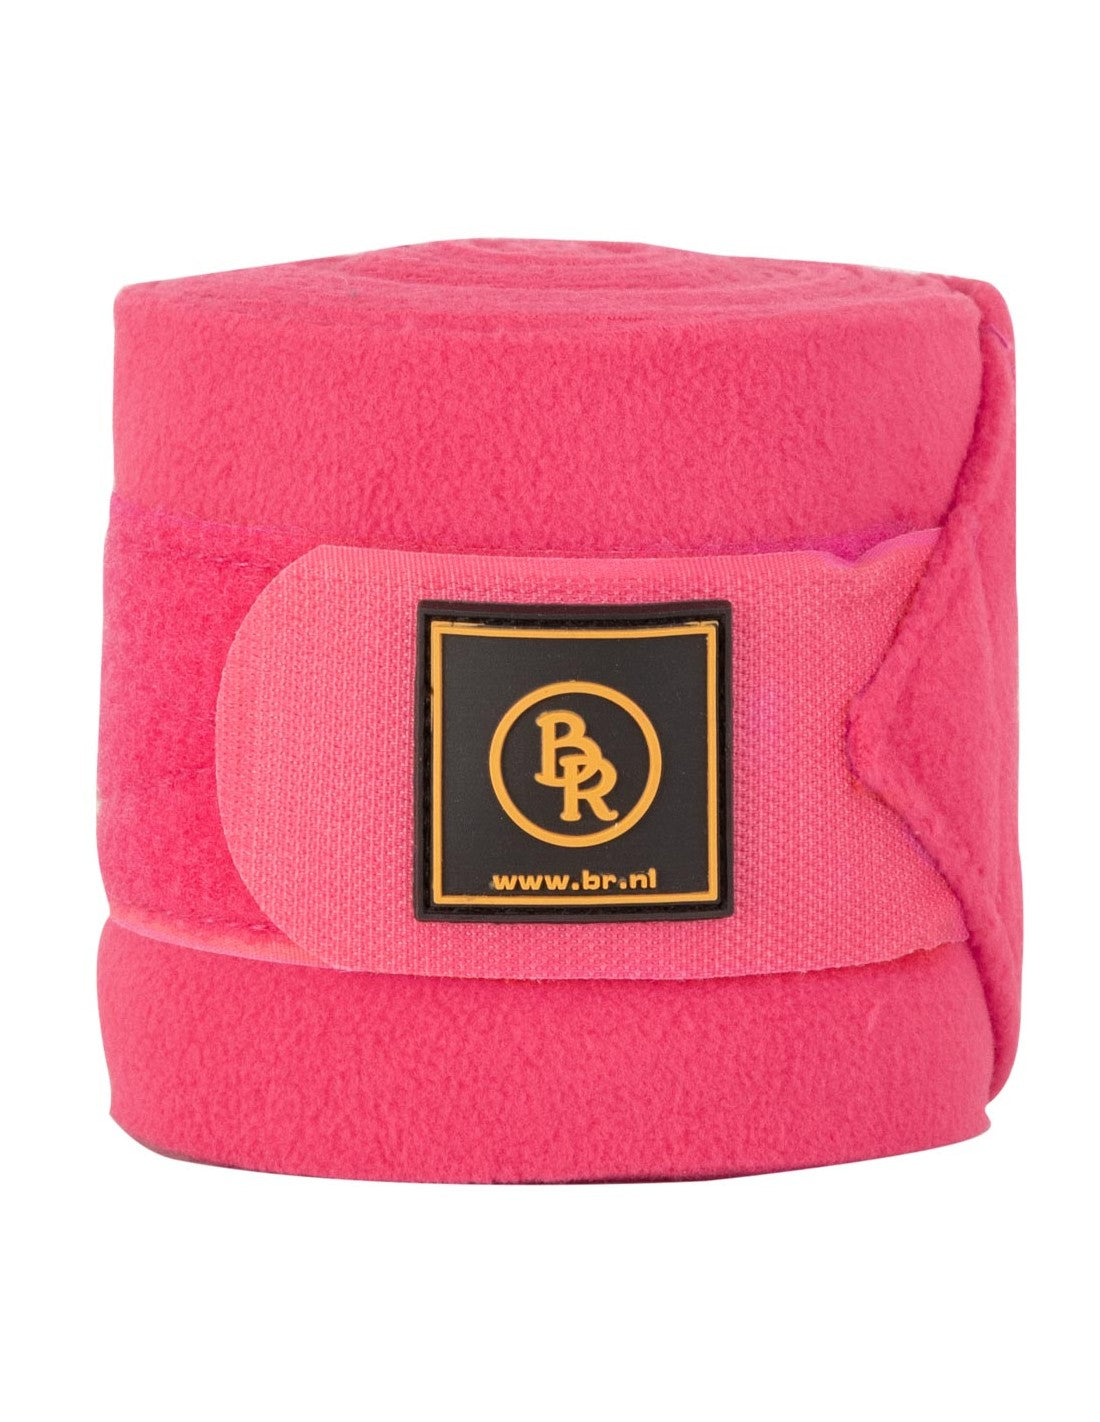 BR Fleece Bandages Event - Full/Raspberry Pink